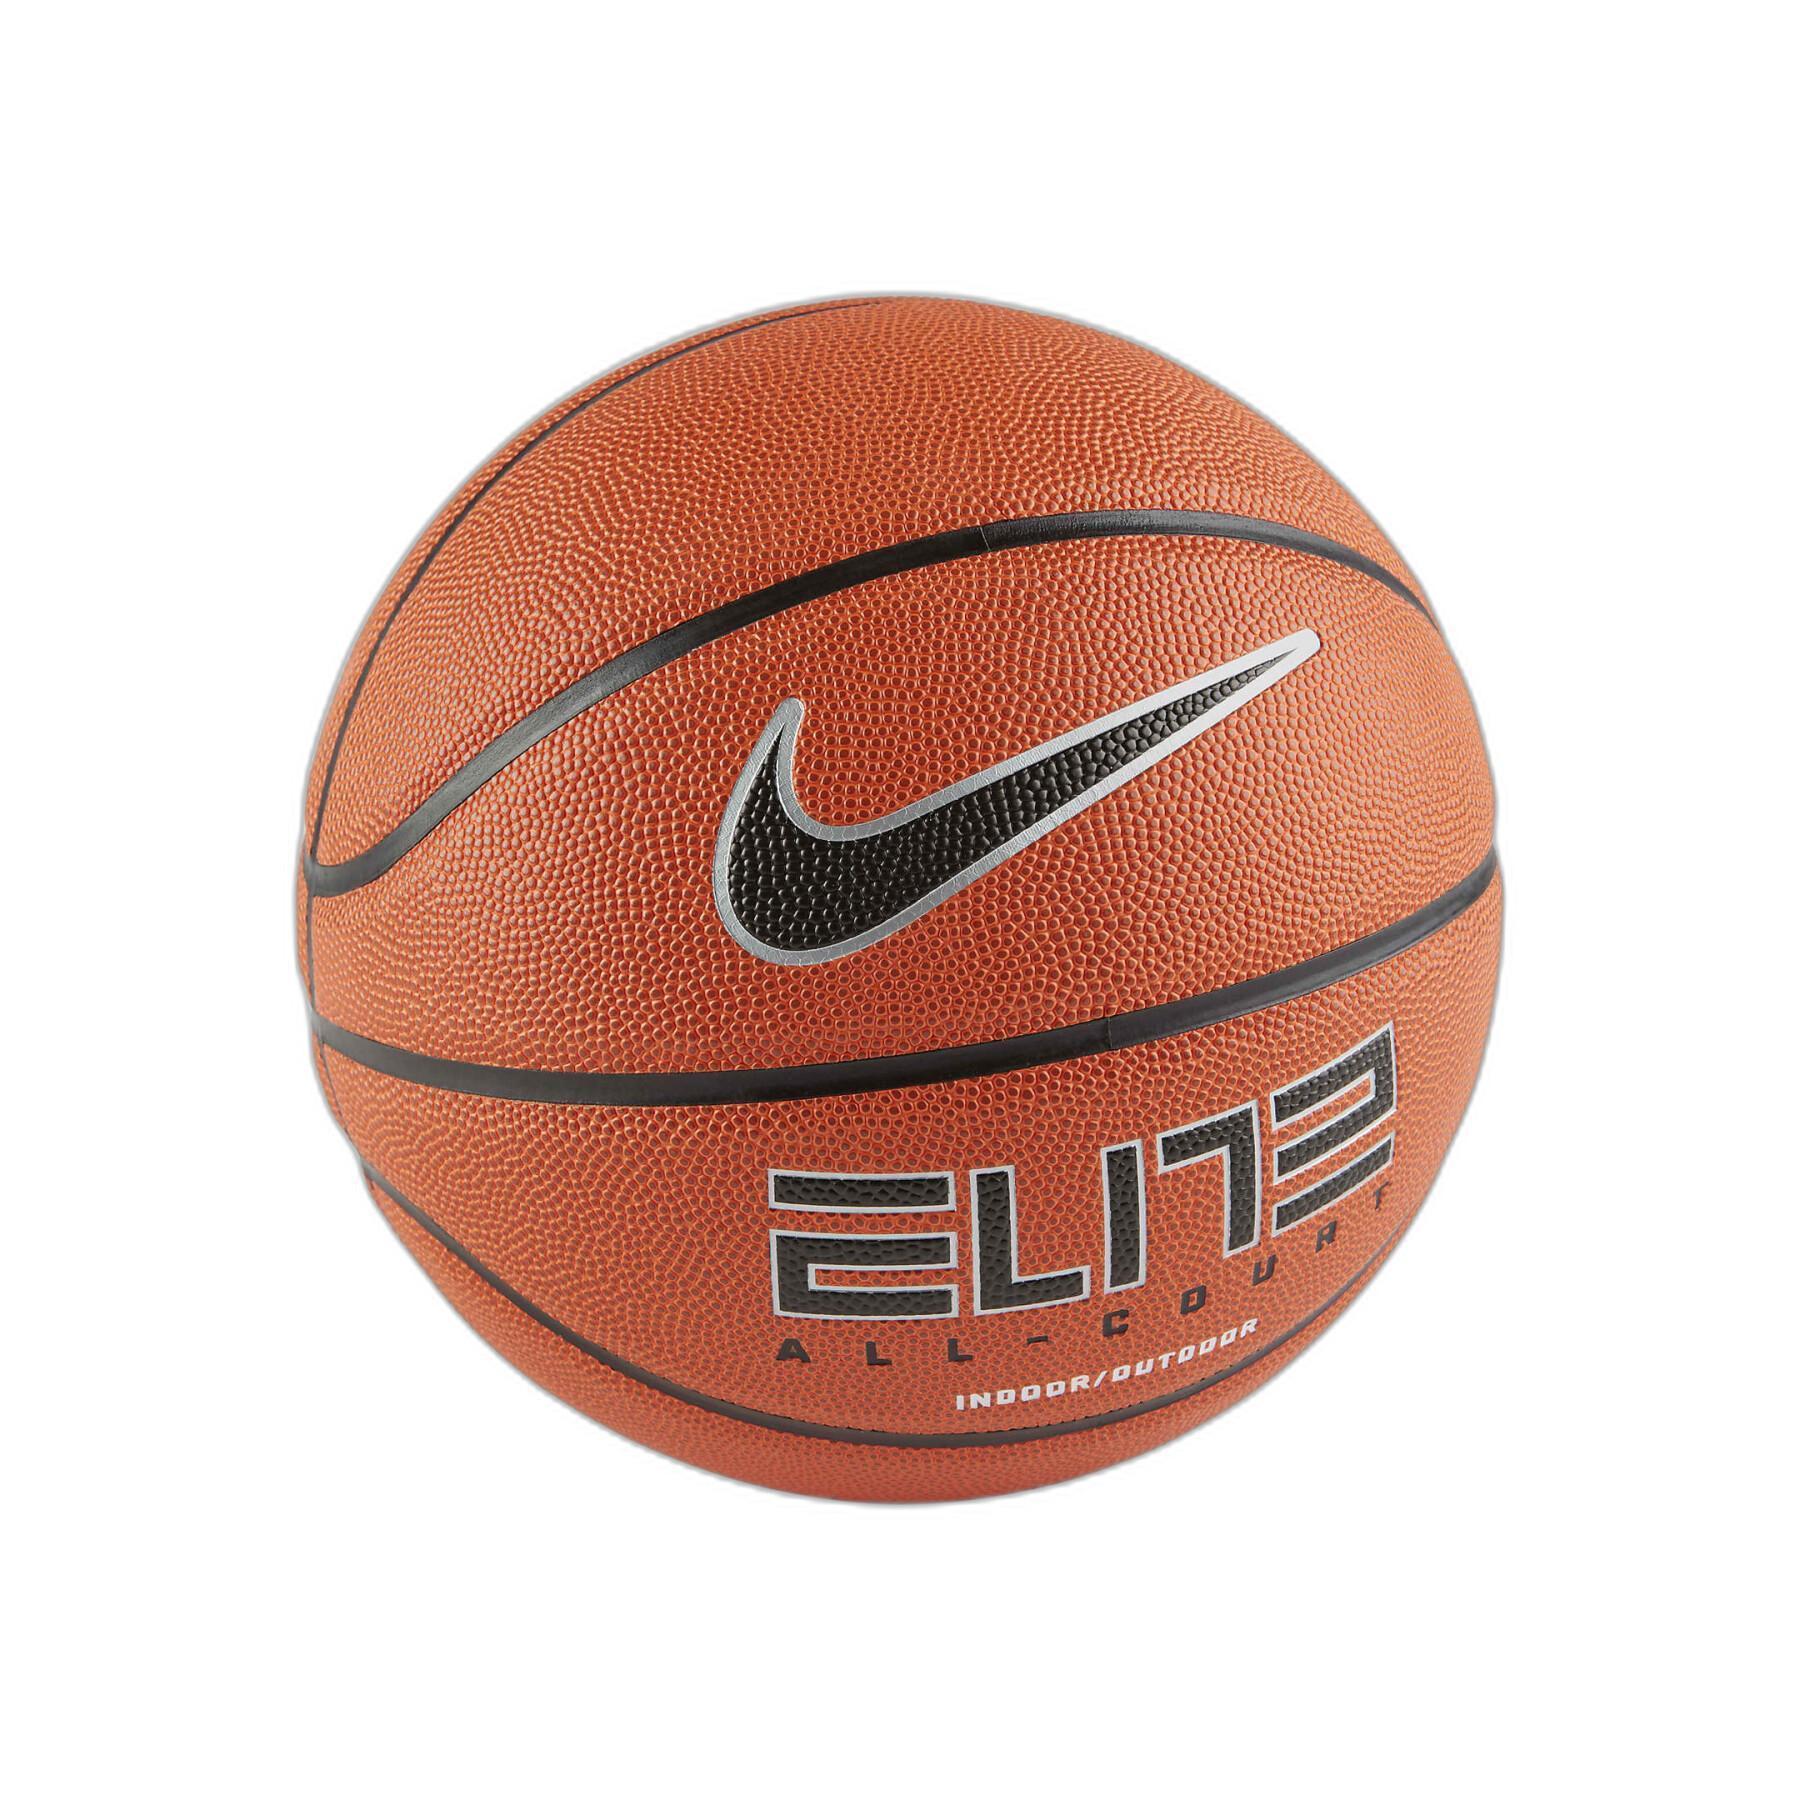 Basketball Nike Elite All Court 8P 2.0 Deflated